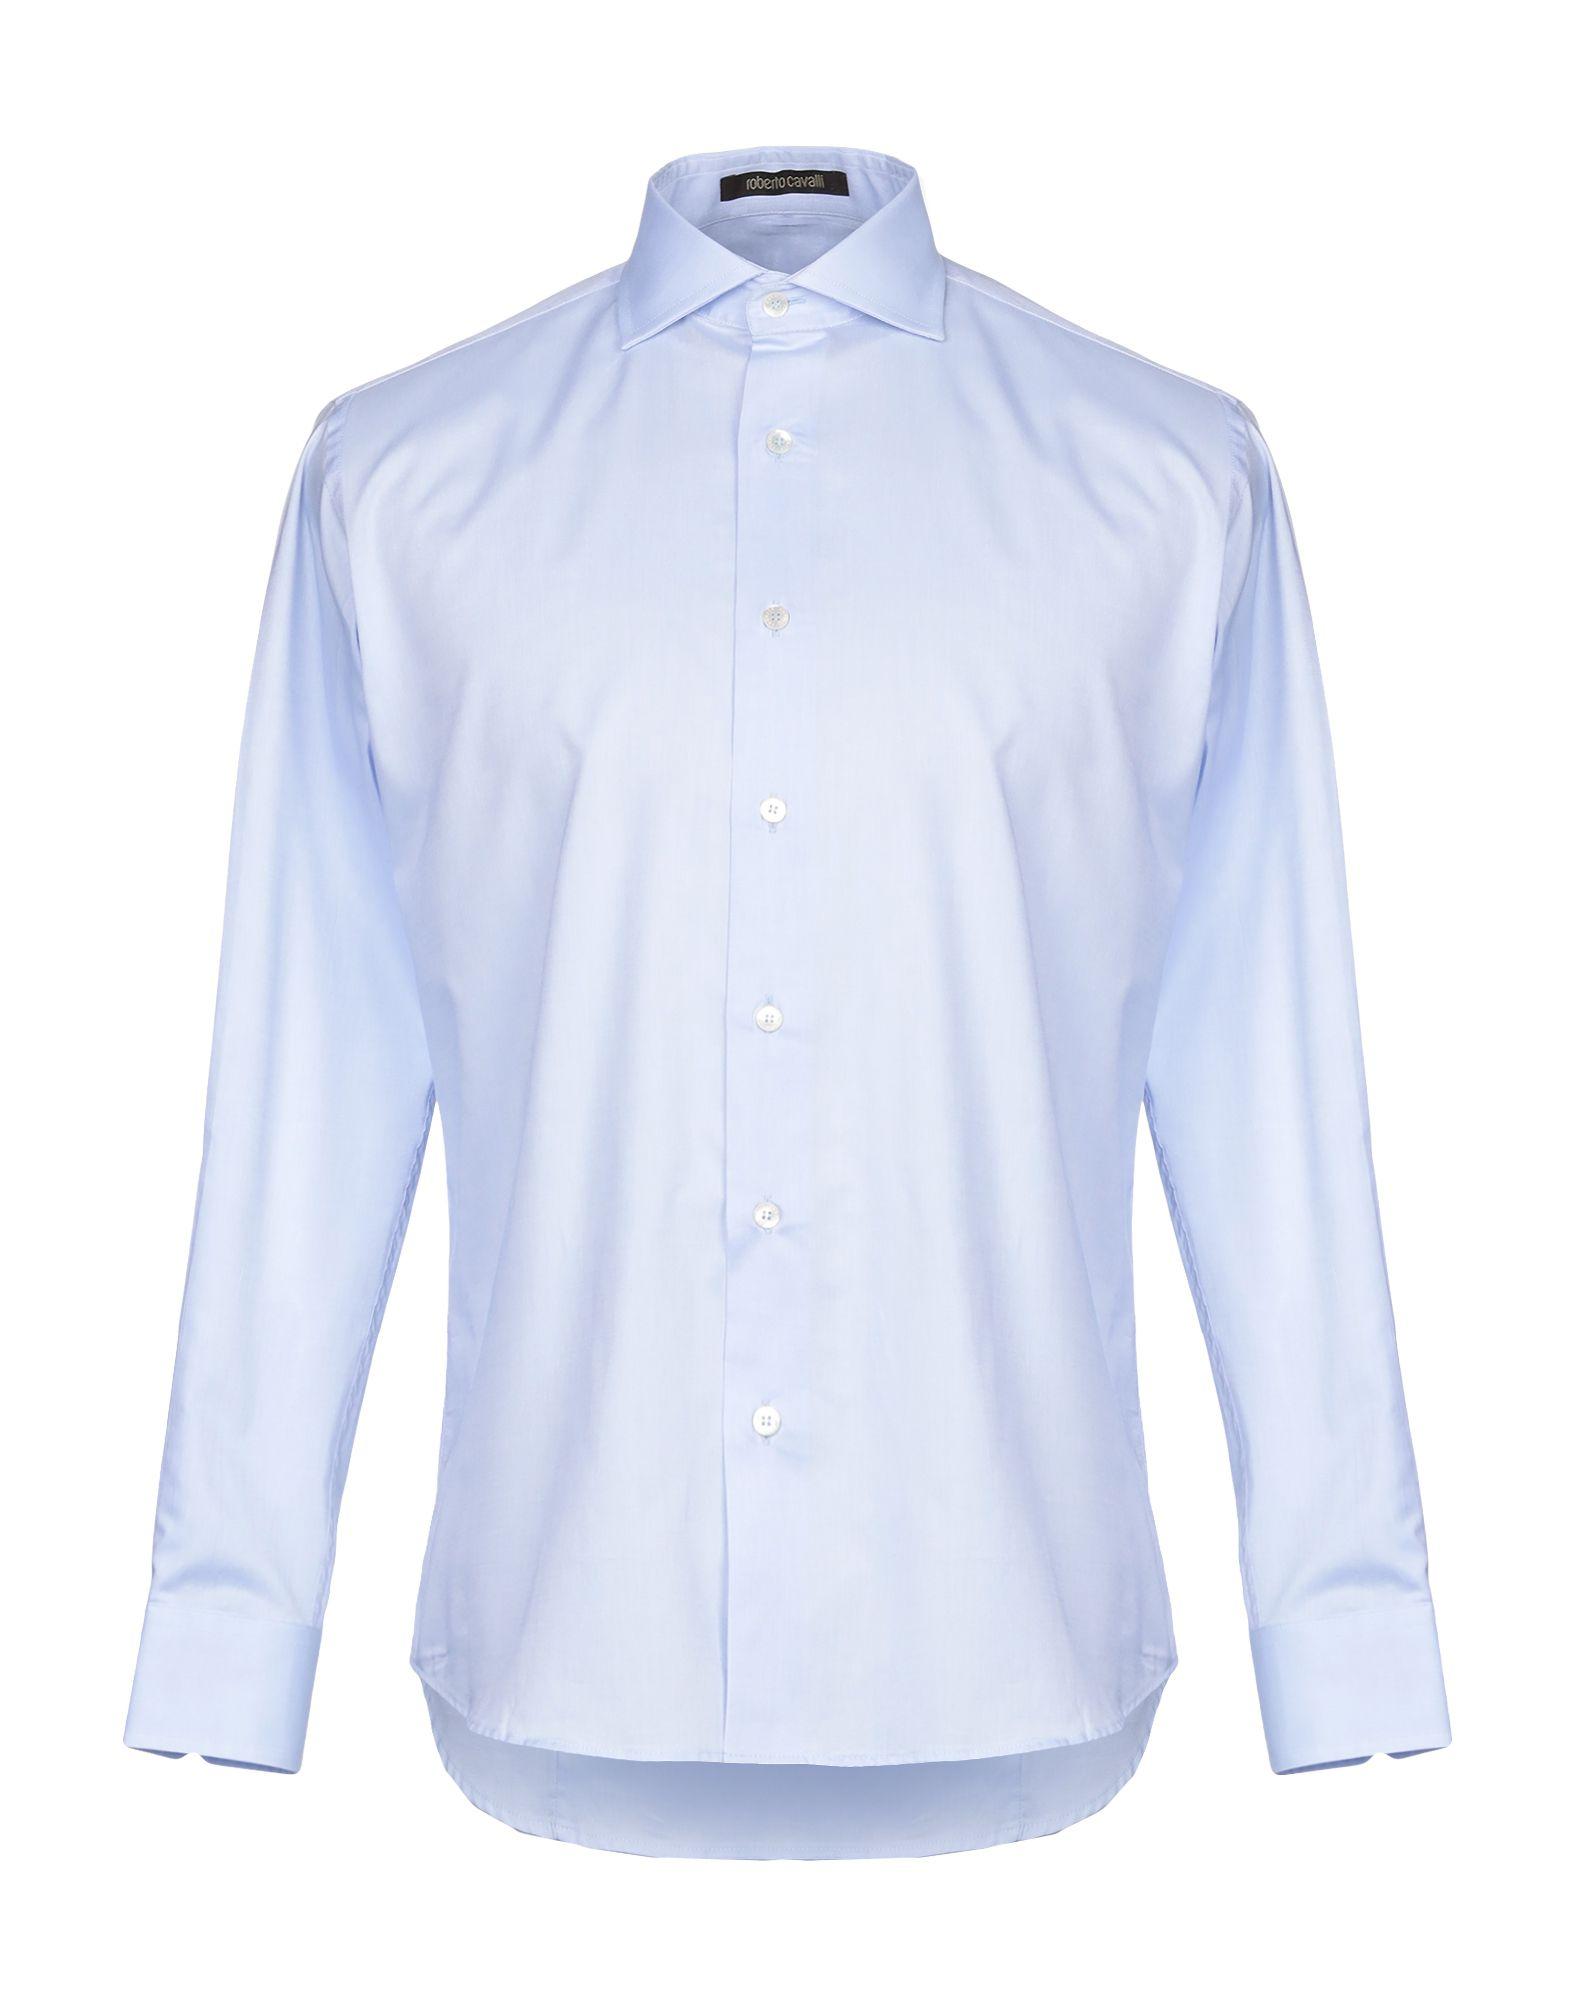 Roberto Cavalli Shirt in Blue for Men - Lyst